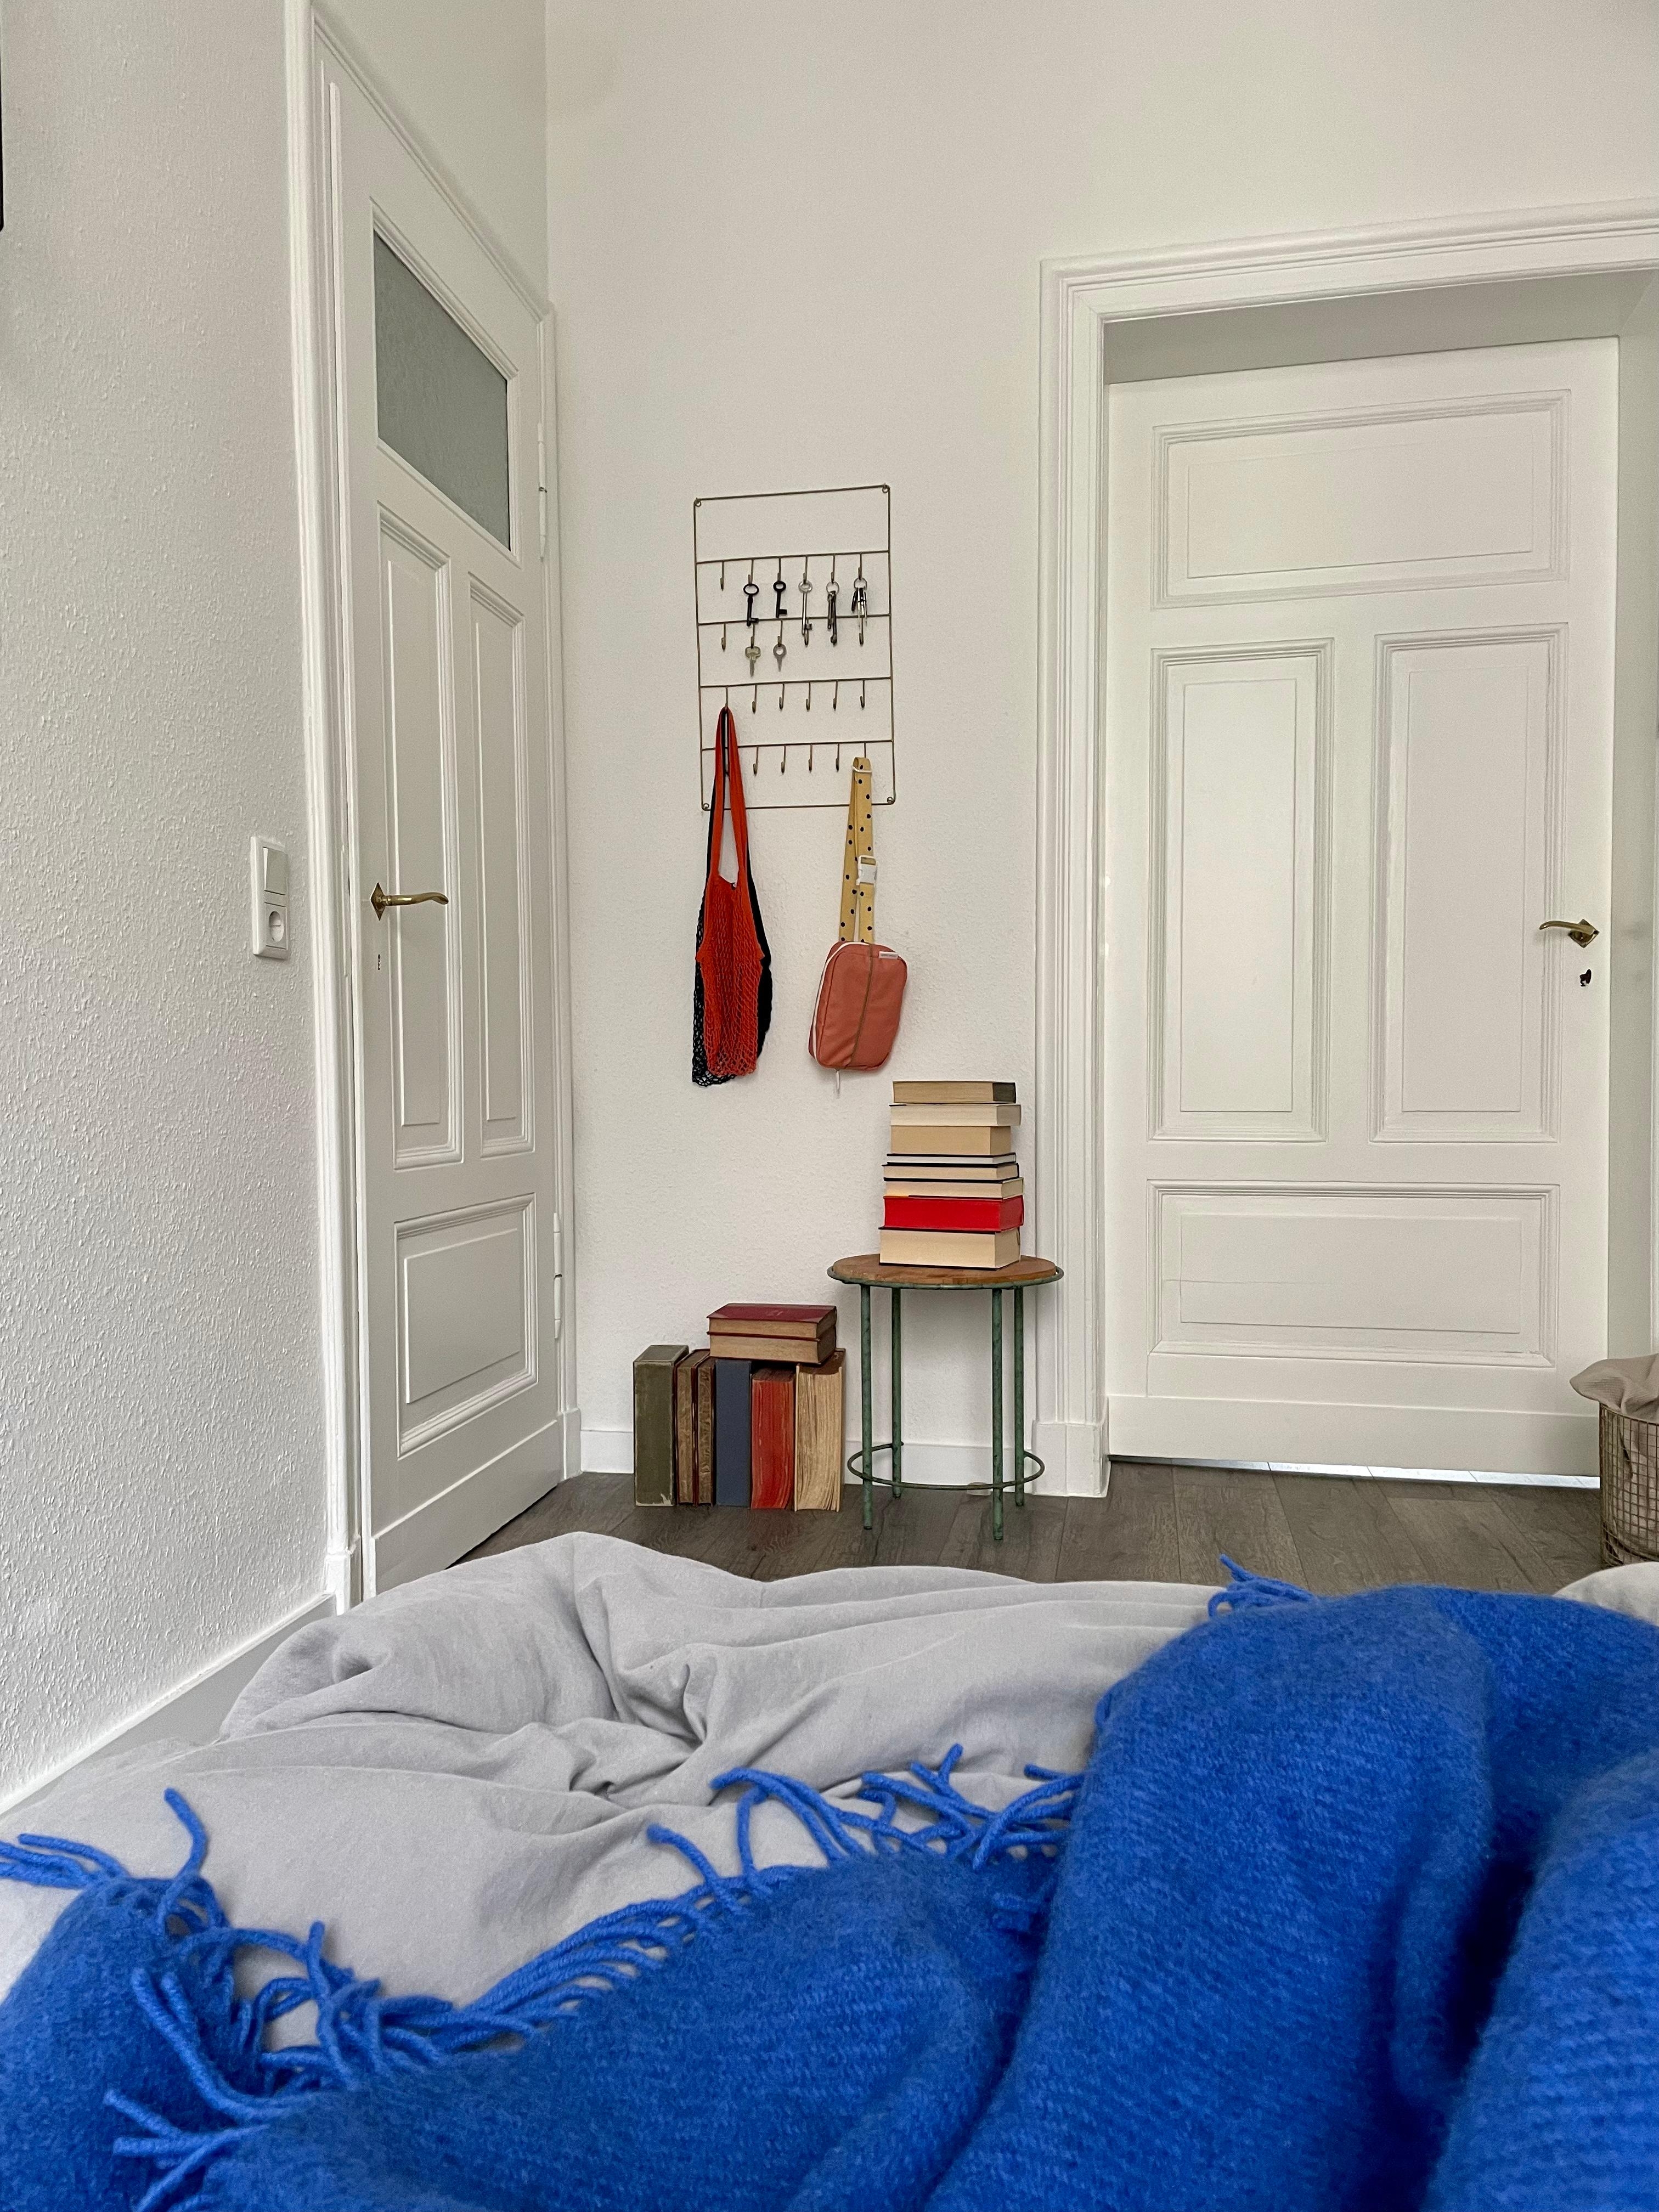 Find me here ✌️#schlafzimmer #bedroom #couchliebt